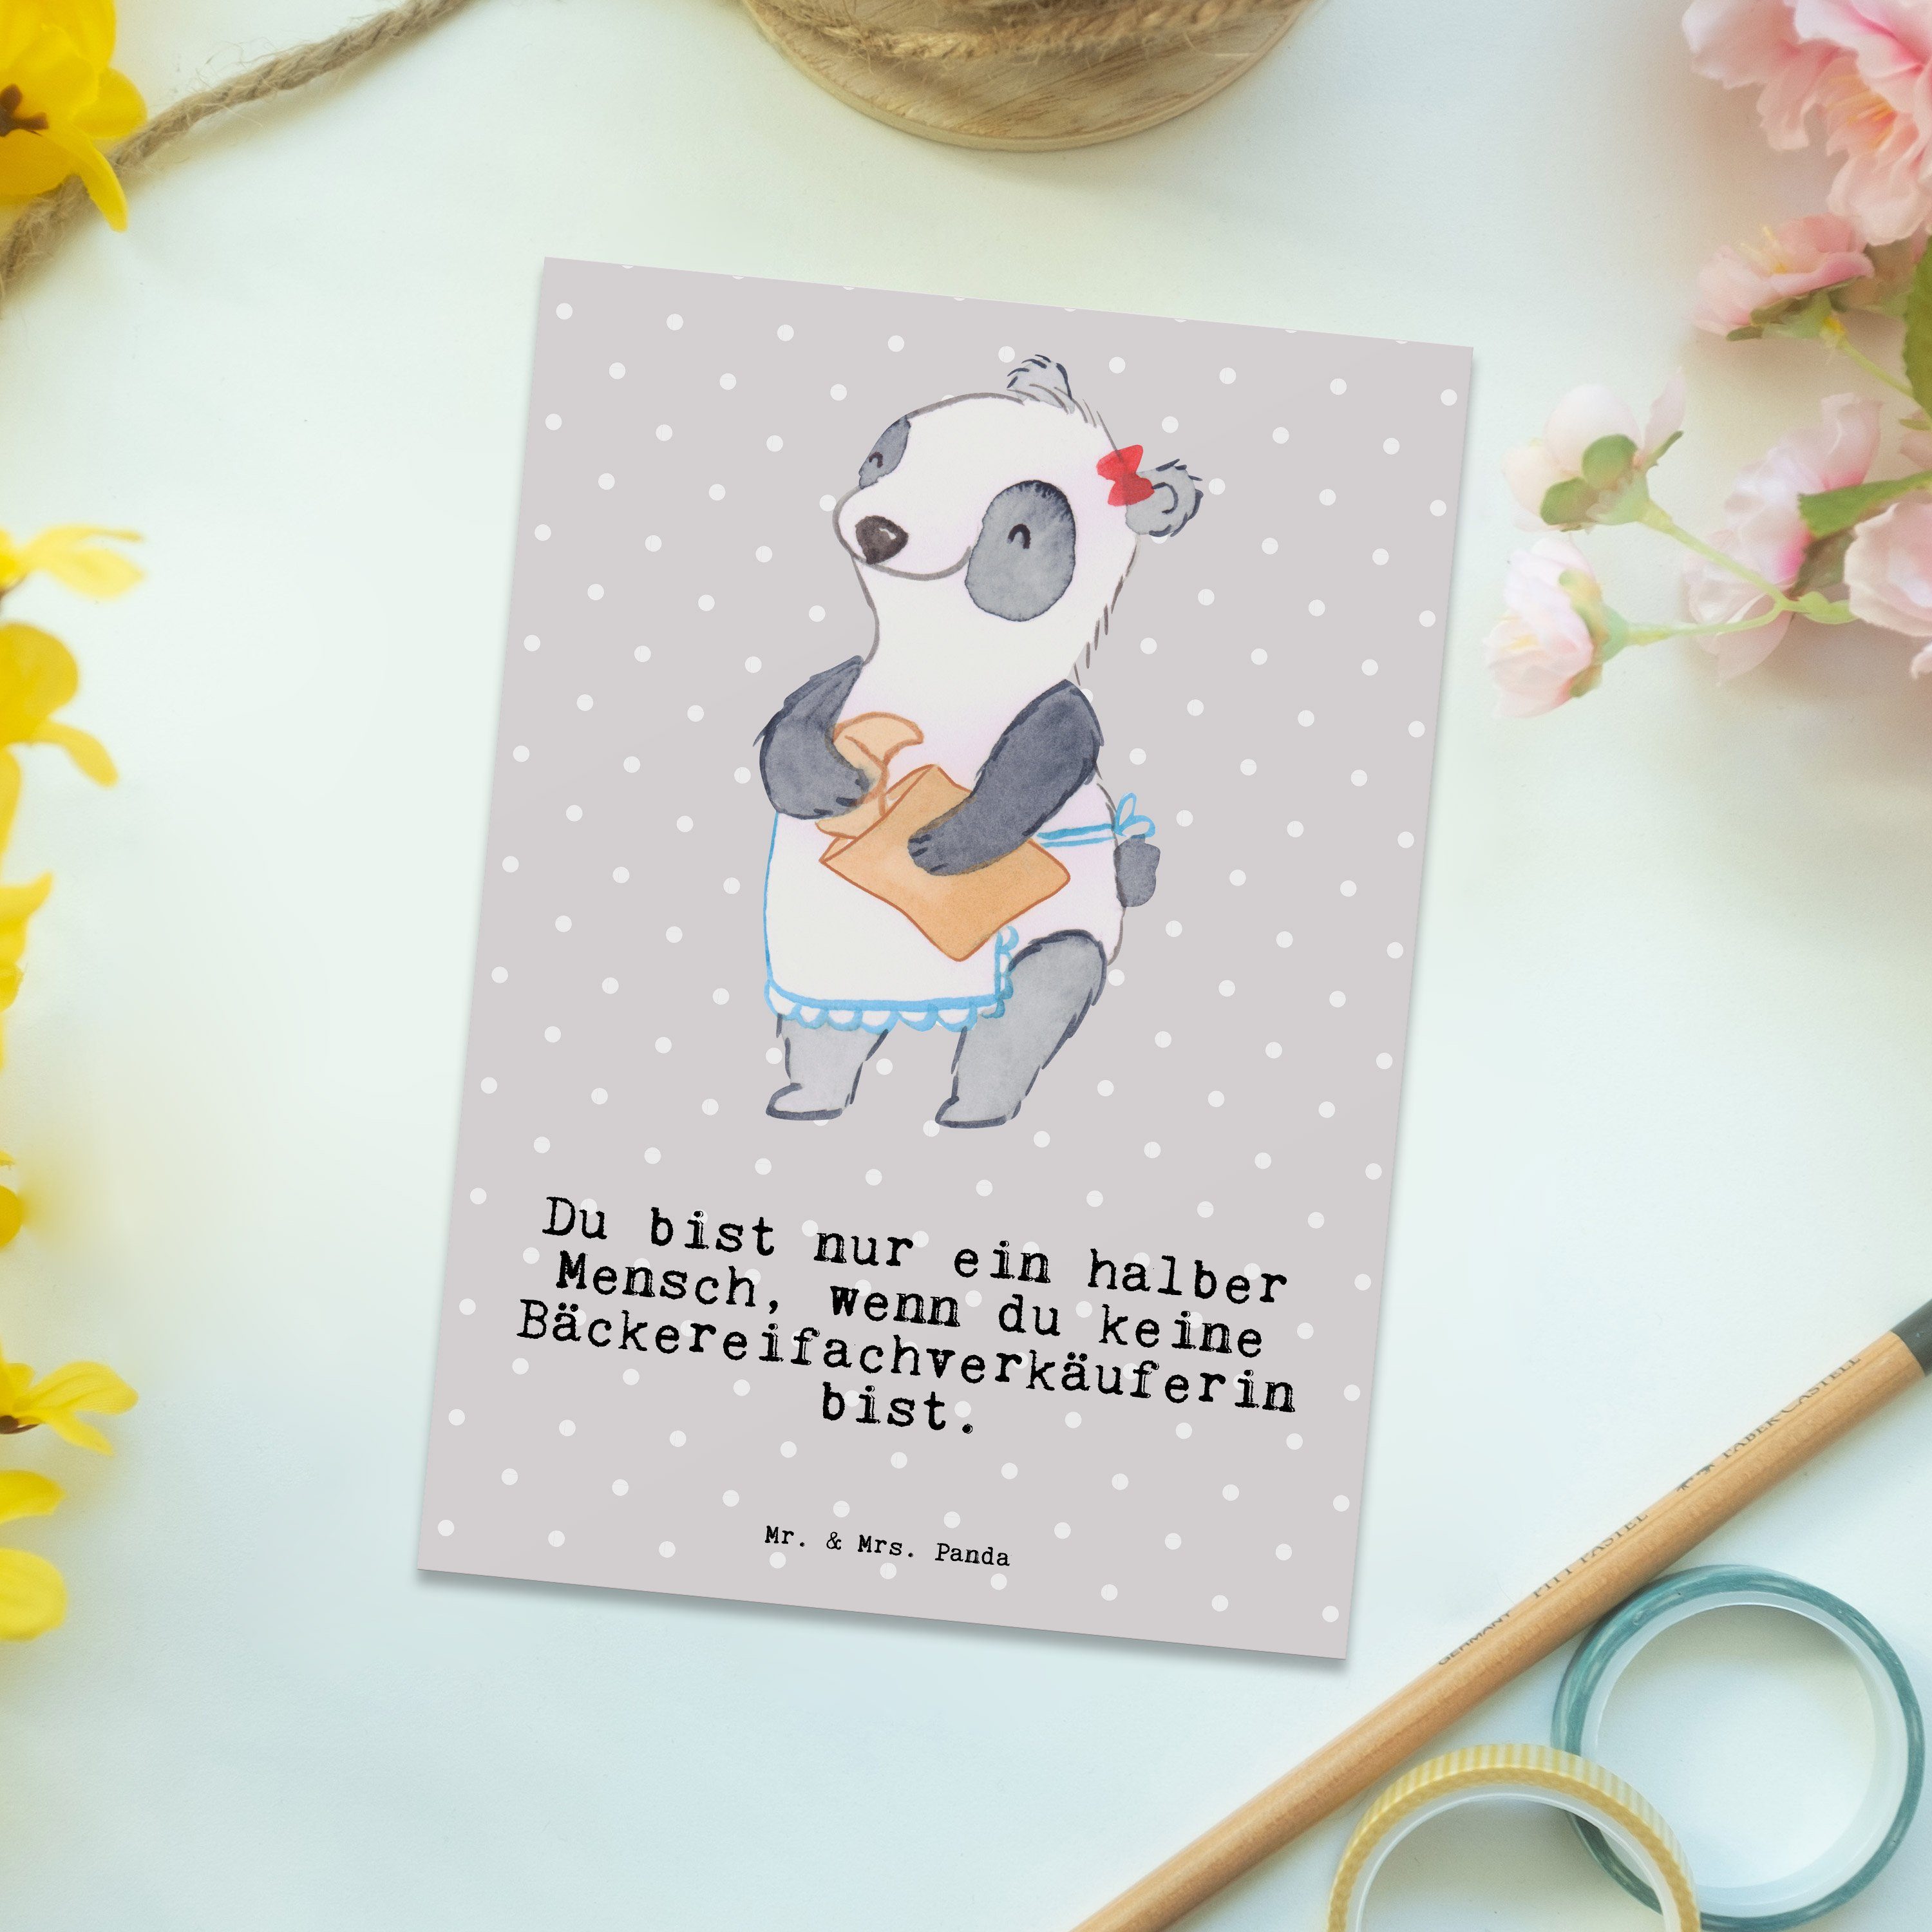 Mr. & Mrs. Panda Postkarte Herz - Pastell mit Grau - Bäckereifachverkäuferin Geschenk, Backstube